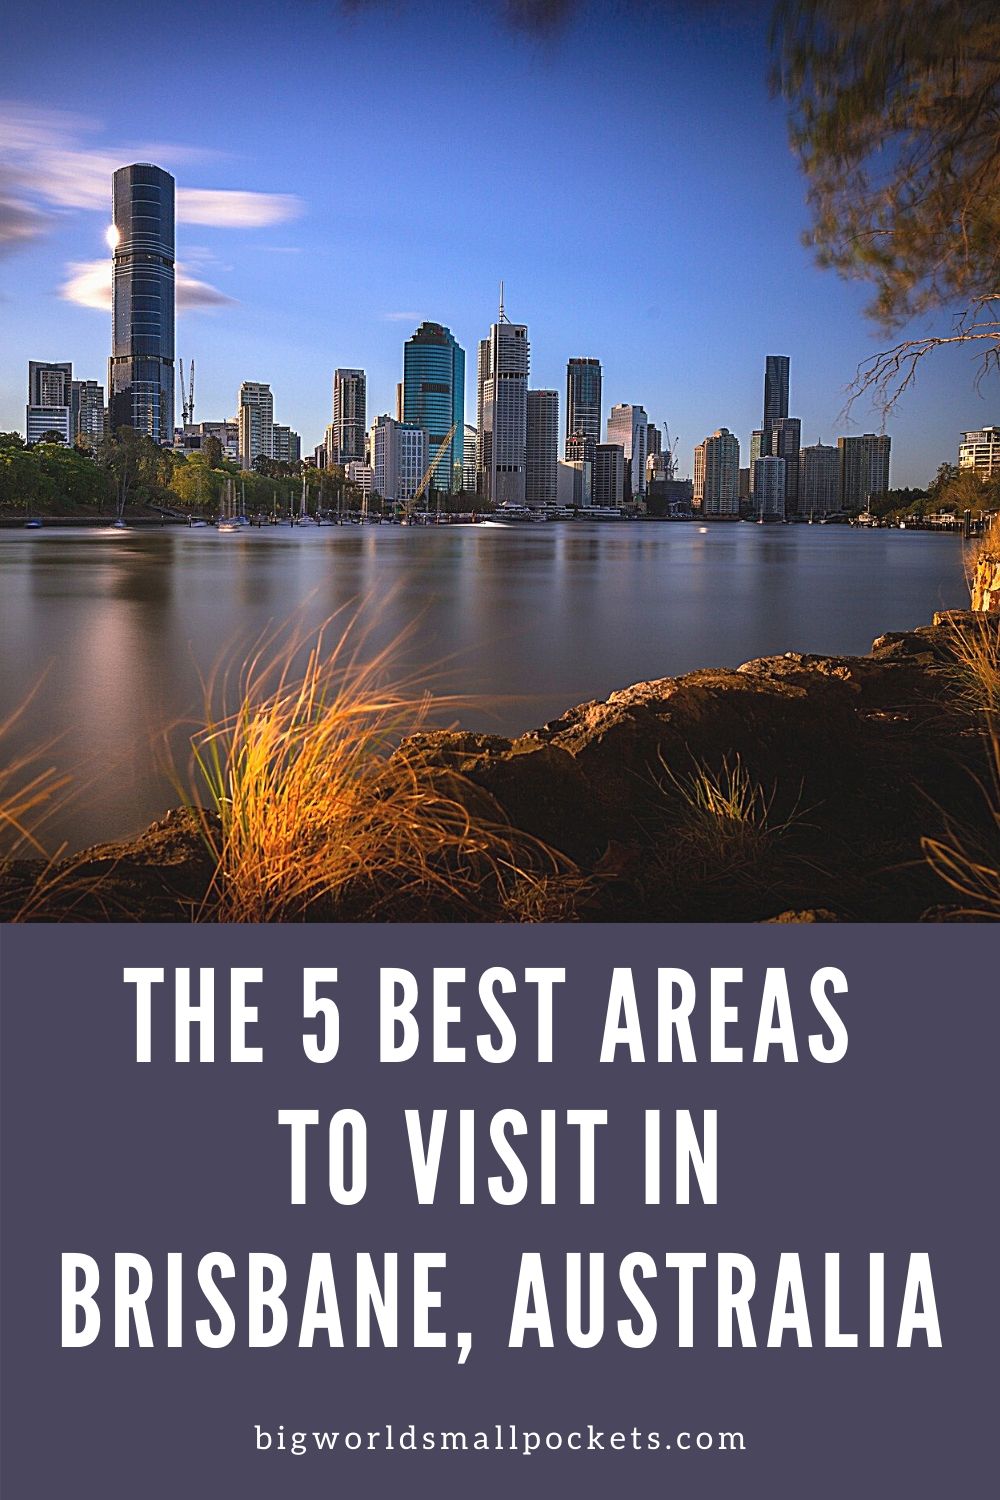 The 5 Best Areas to Visit in Brisbane, Australia